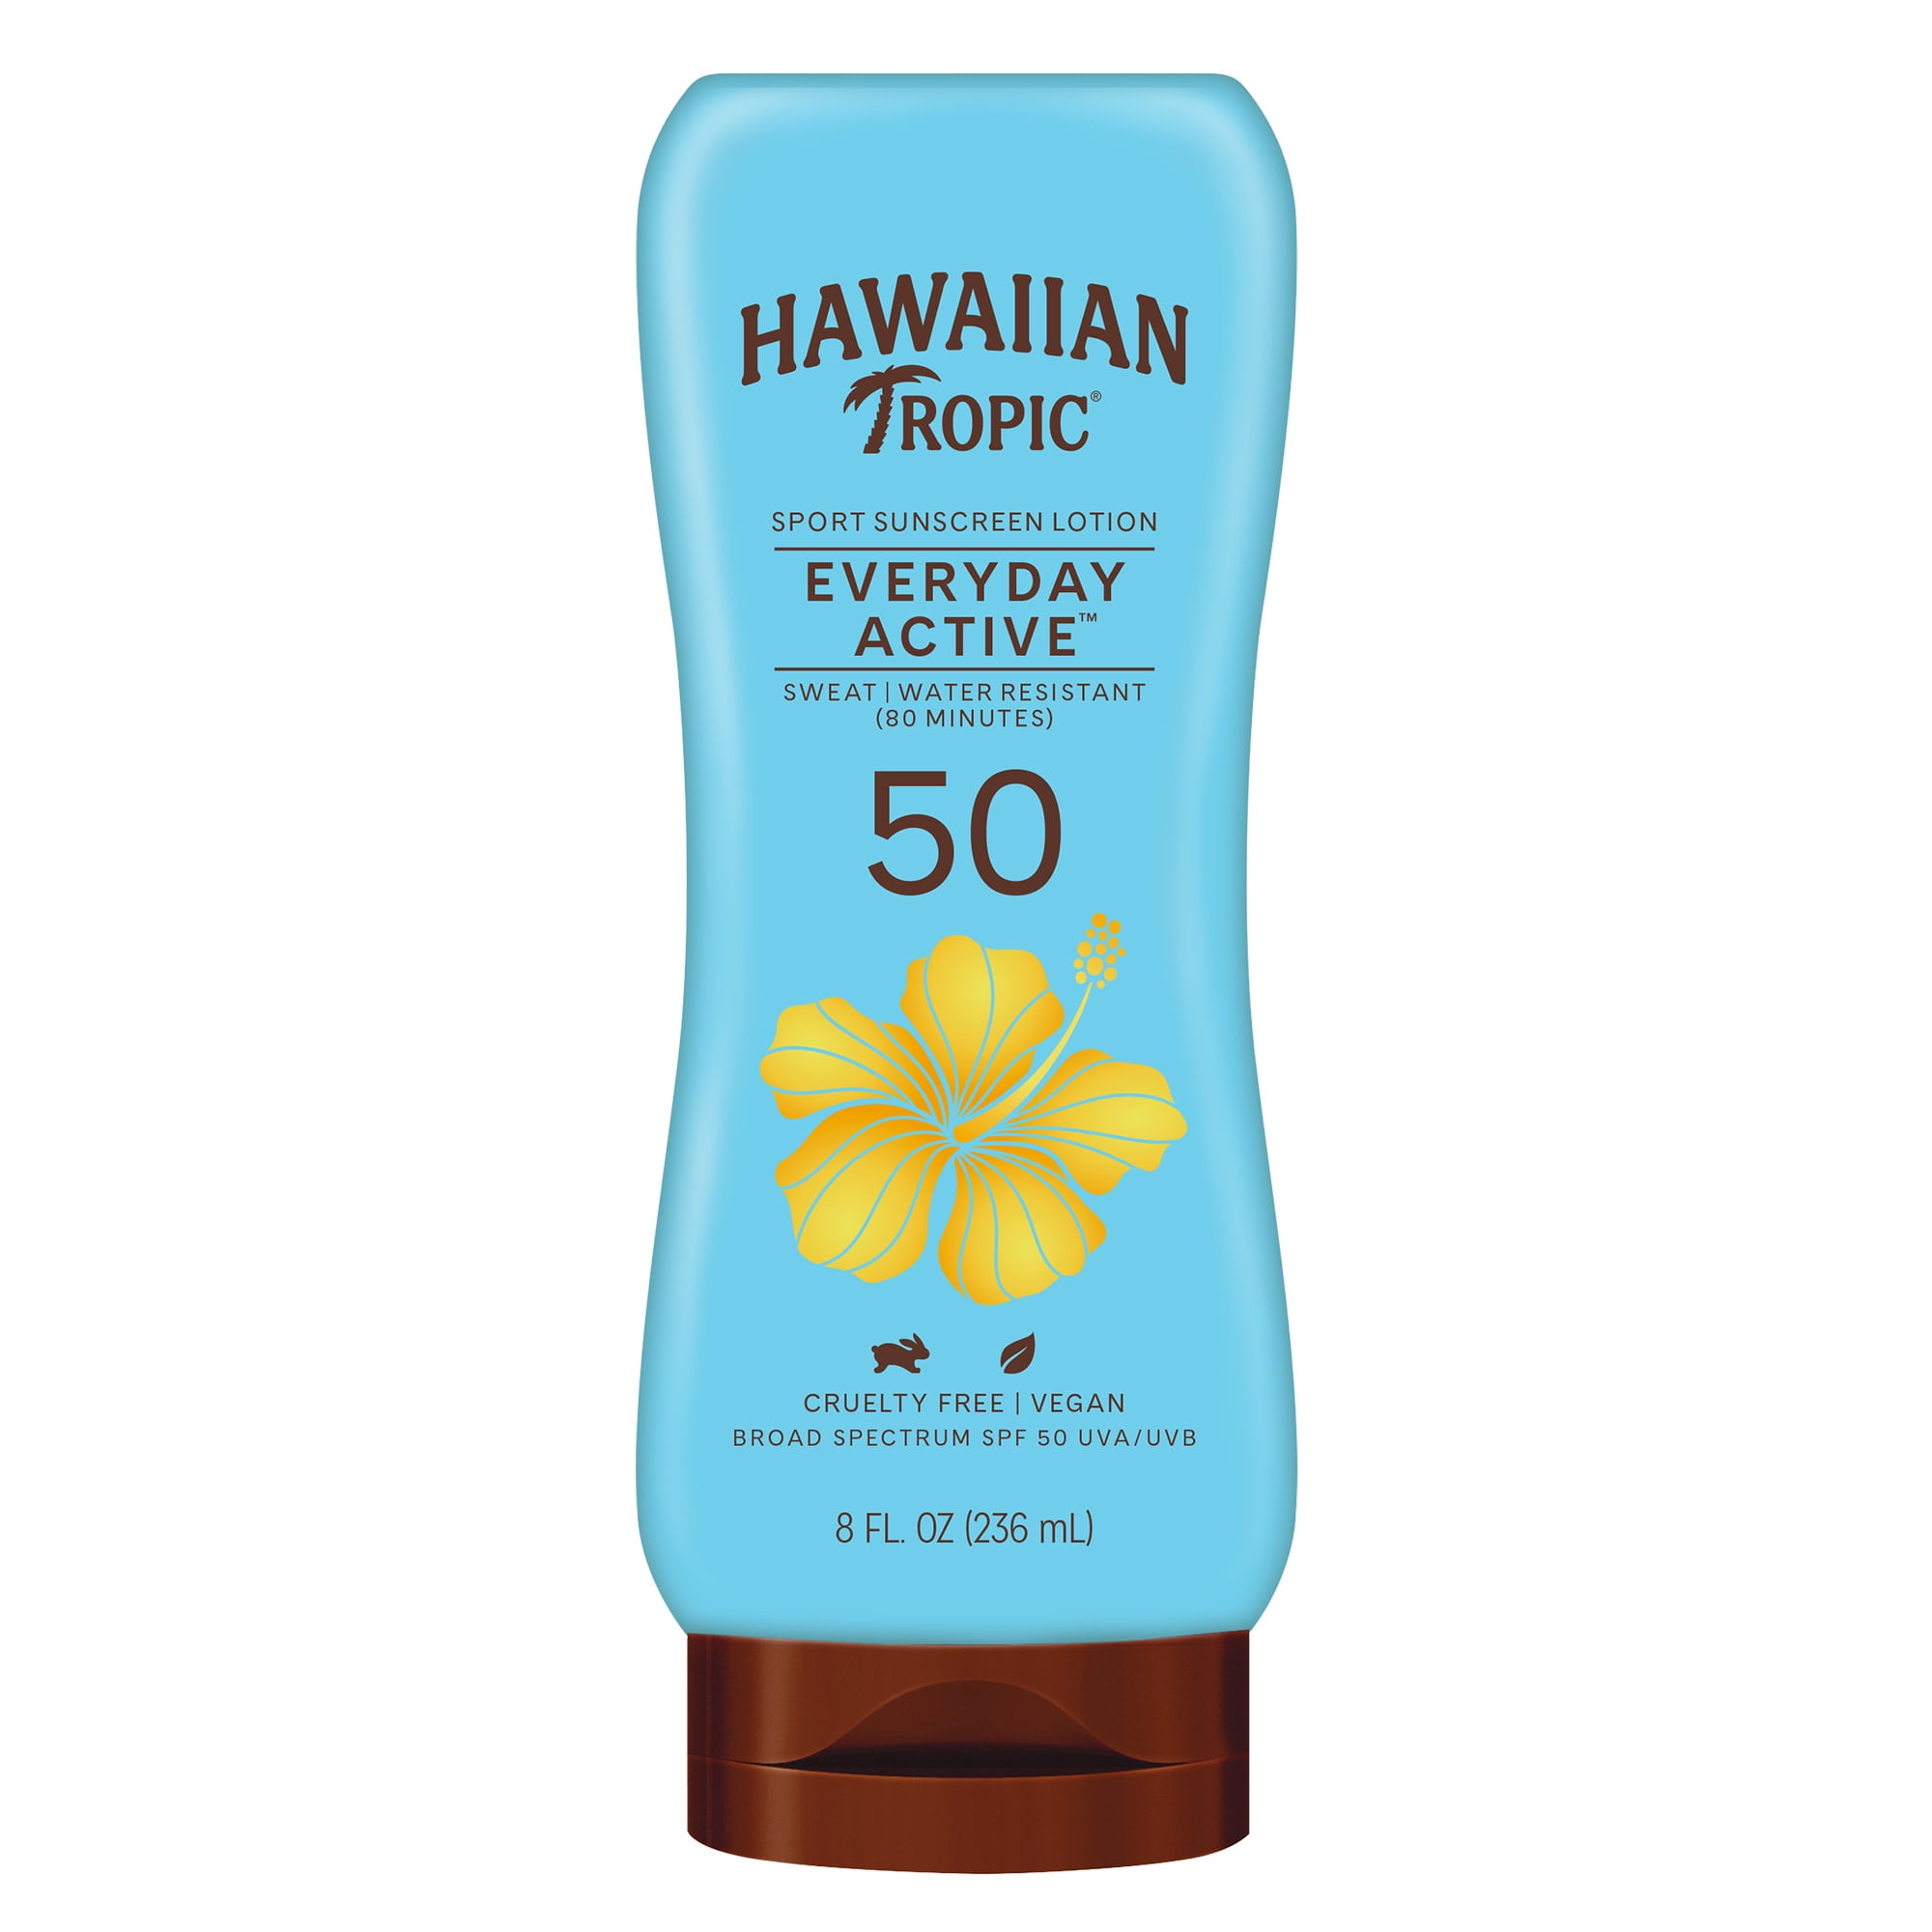 Hawaiian Tropic Everyday Active Lotion Sunscreen 8 Oz, SPF 50, Won't Clog Pores, Sweat & Water Resistant (80 Minutes) Sunblock